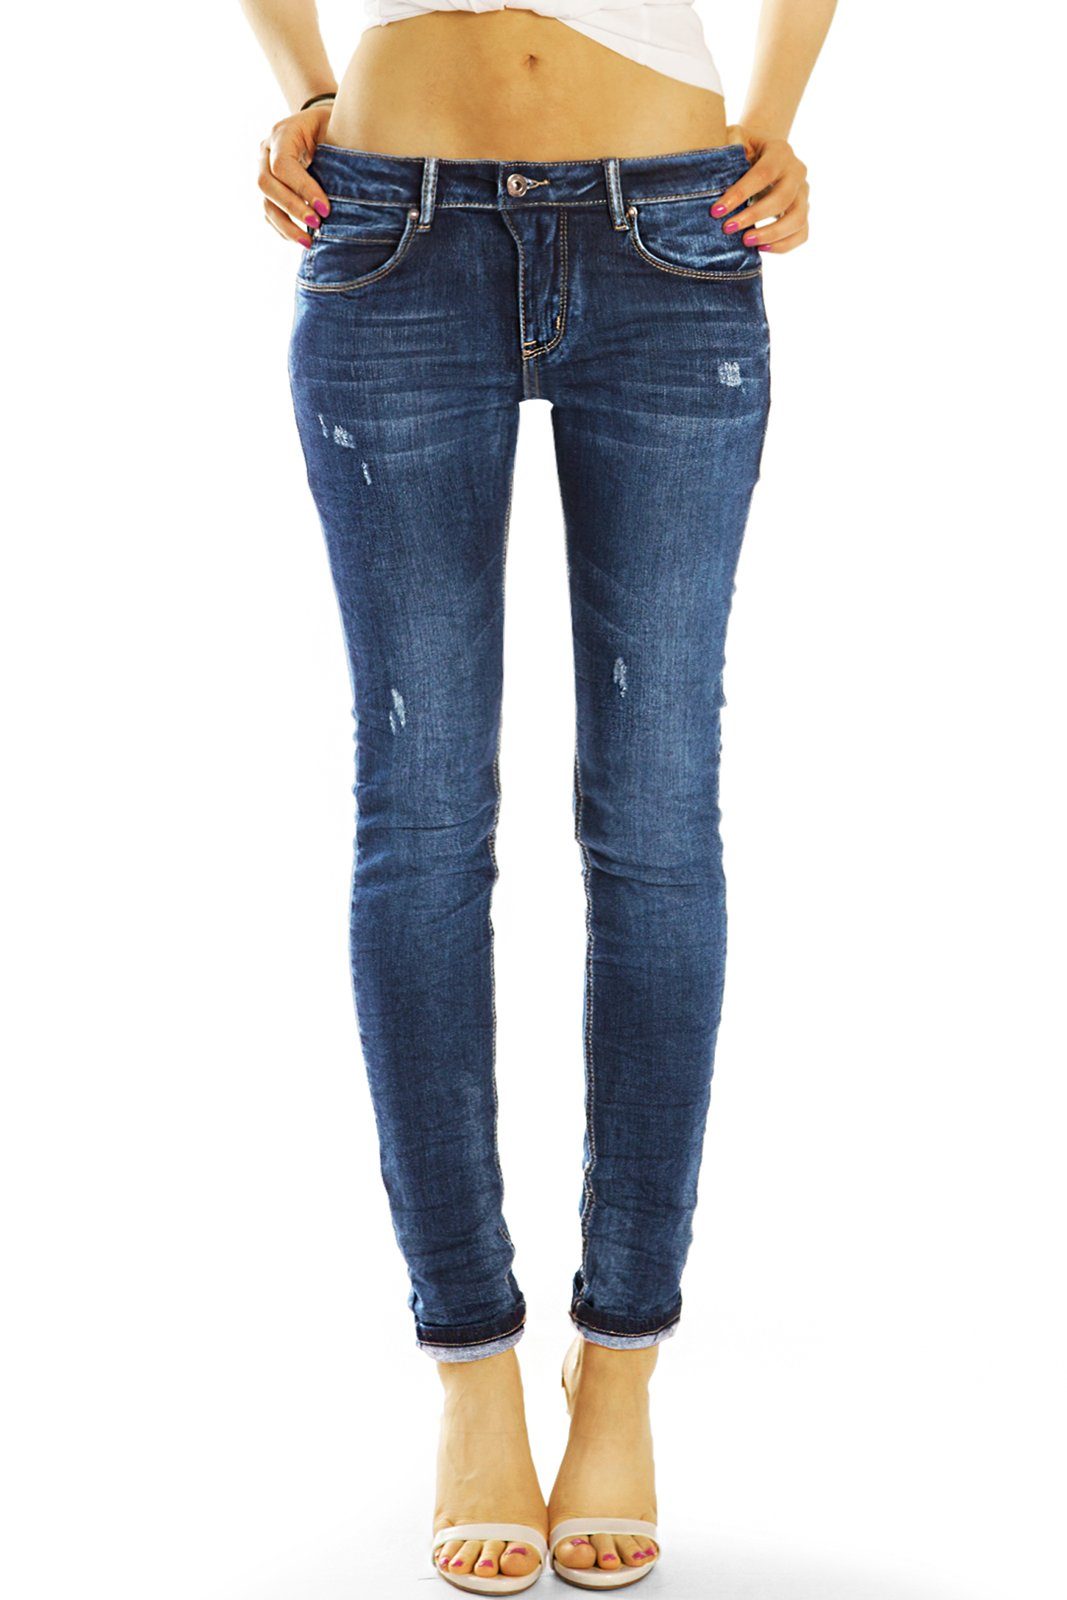 Damen 5 Low-rise-Jeans - mit low j55L Röhrenjeans Anteil, Style - dunkelblau styled be Stretch Skinny / in Fit waist medium Hosen Stretch Pocket